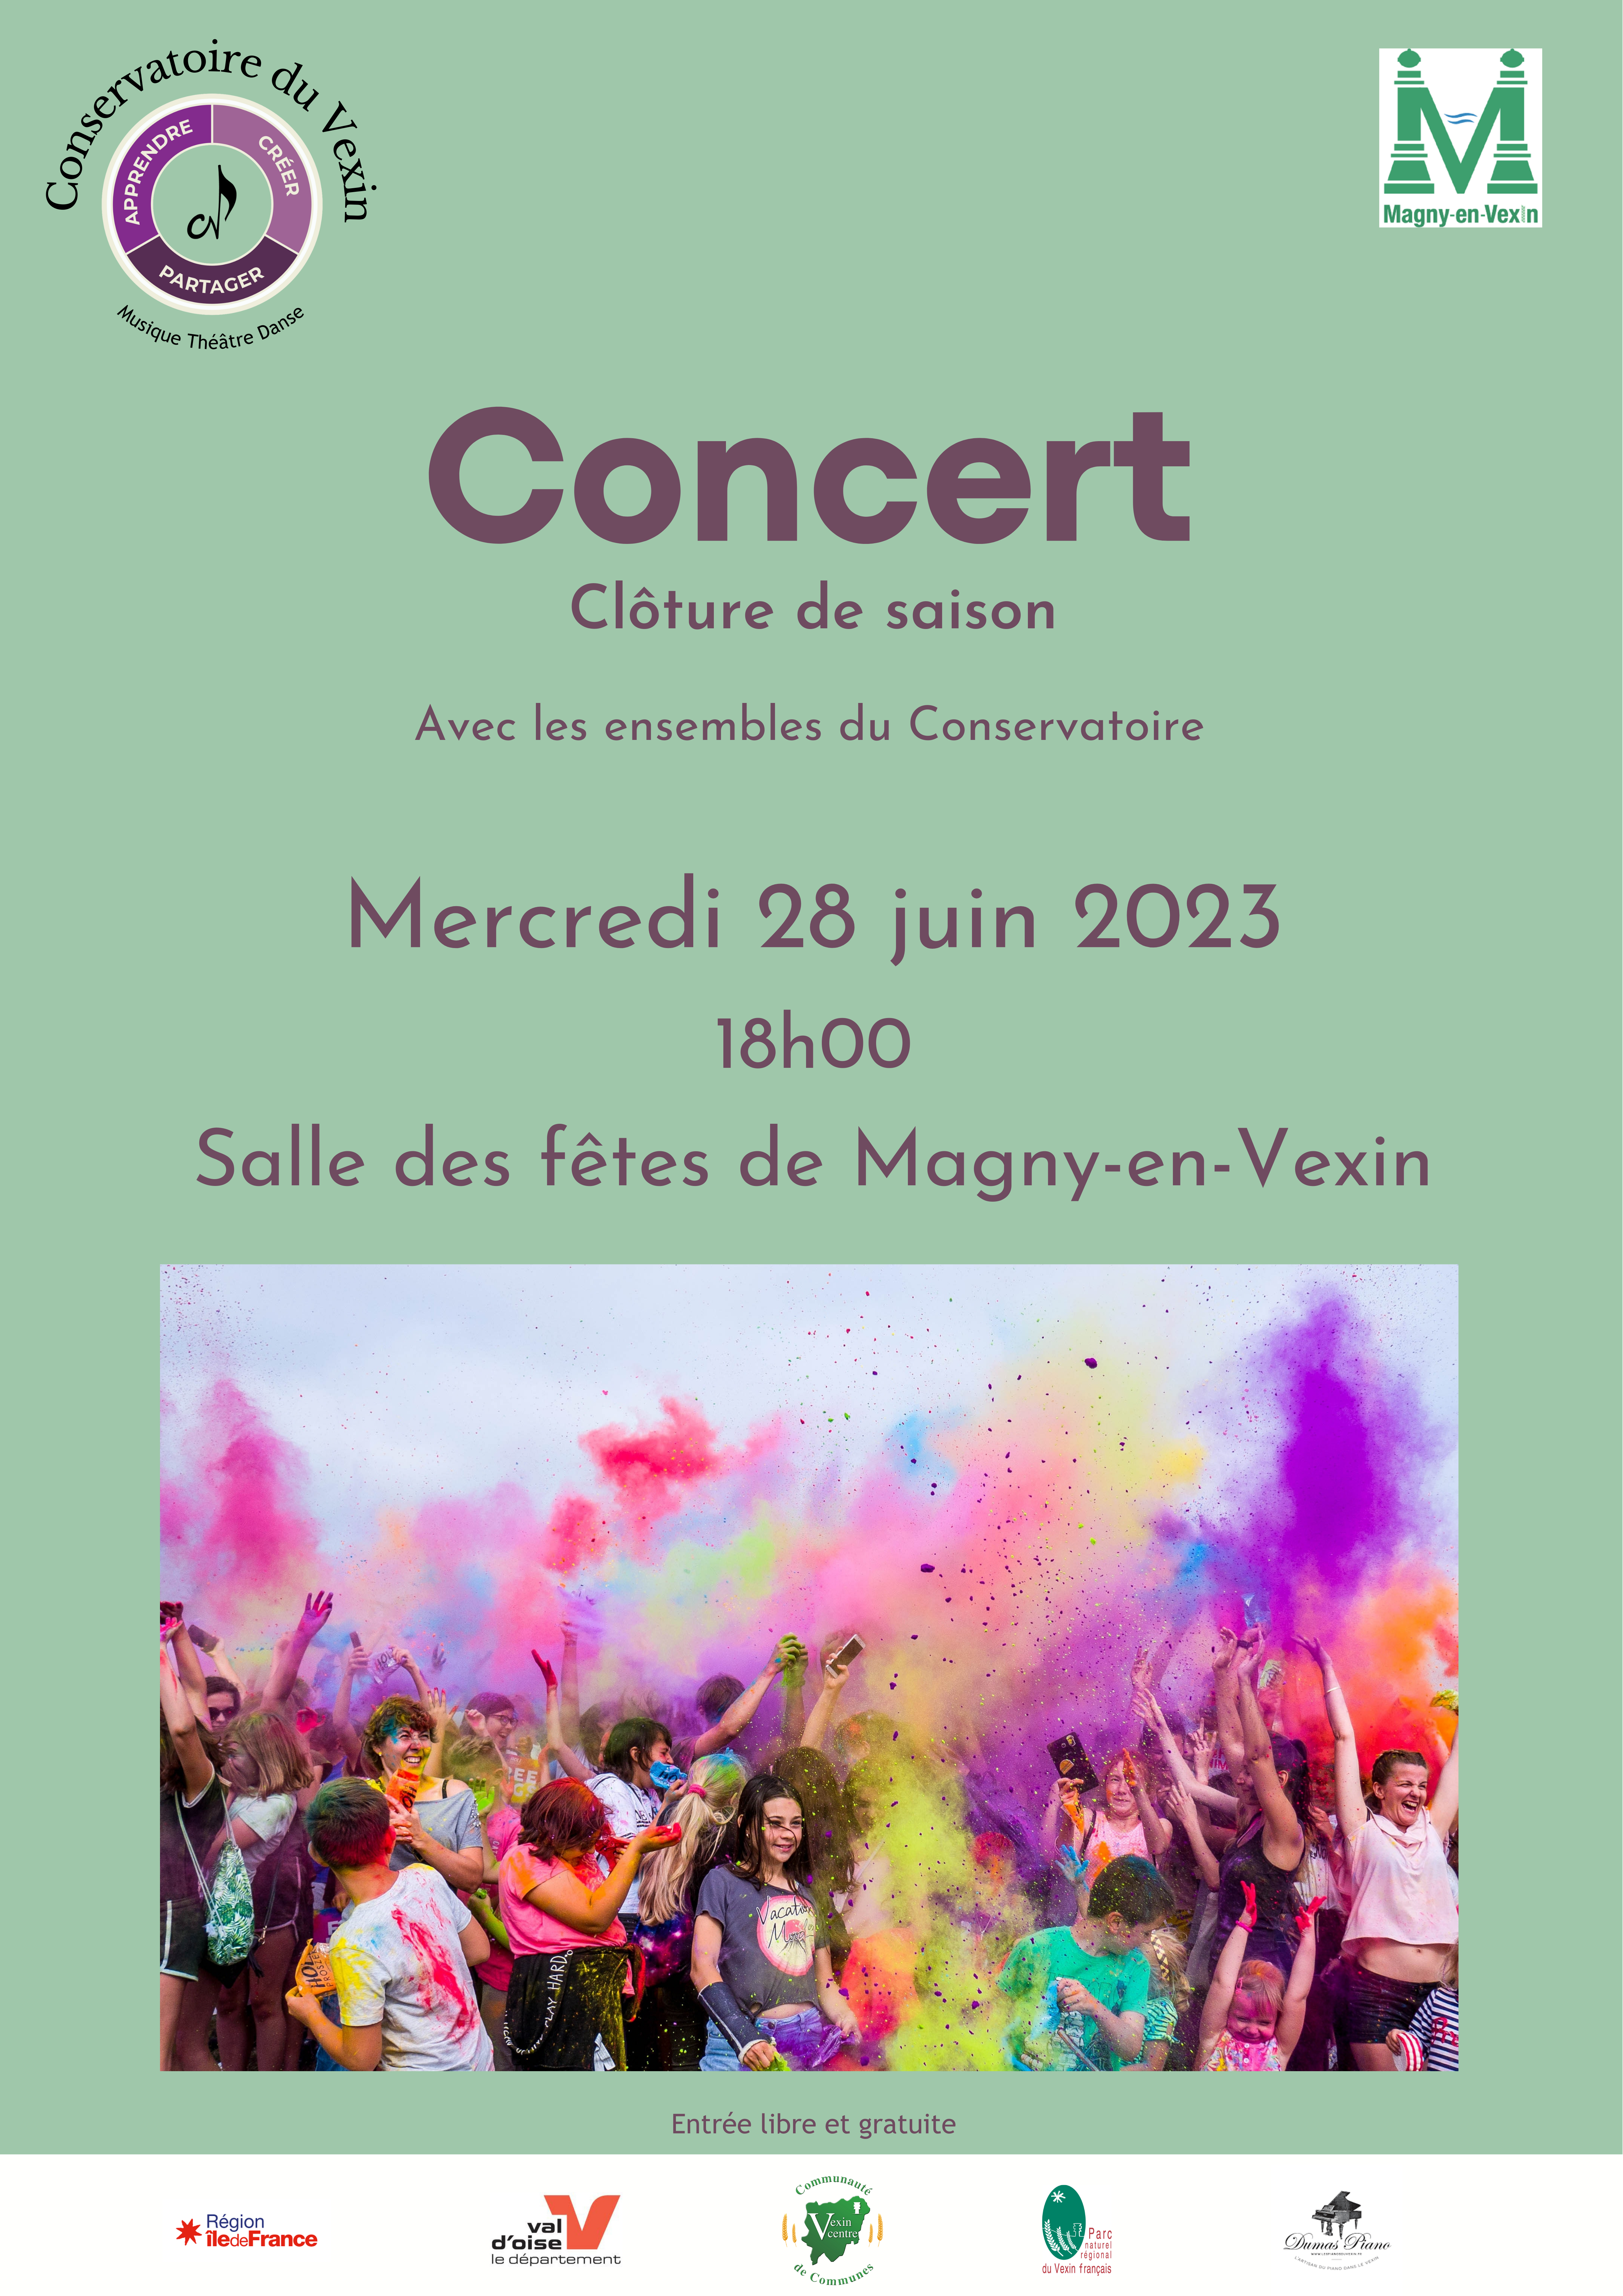 Concert à Magny-en Vexin, mercredi 28 juin